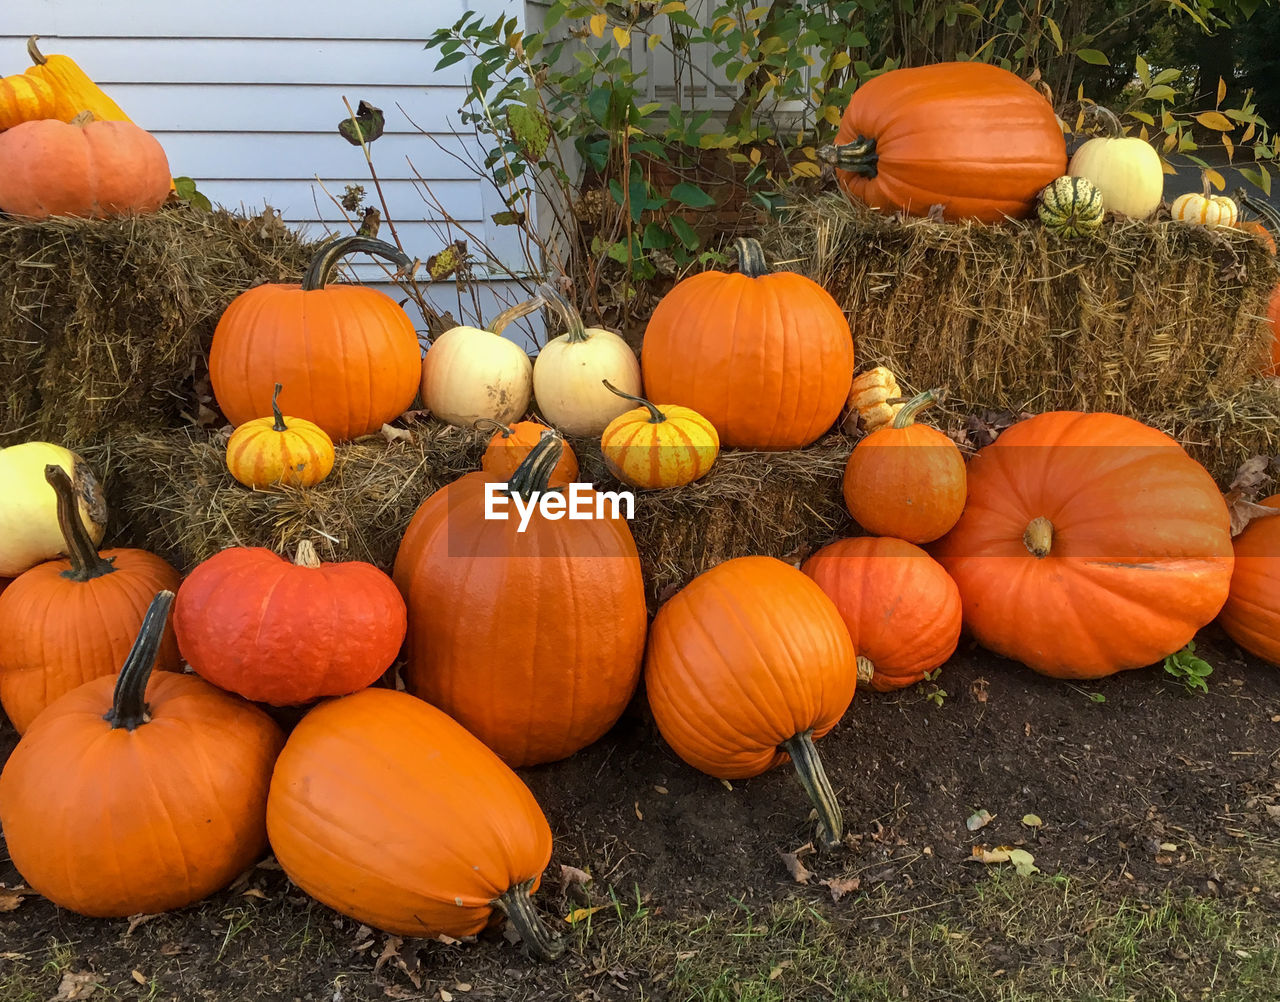 Pumpkins as decoration during autumn